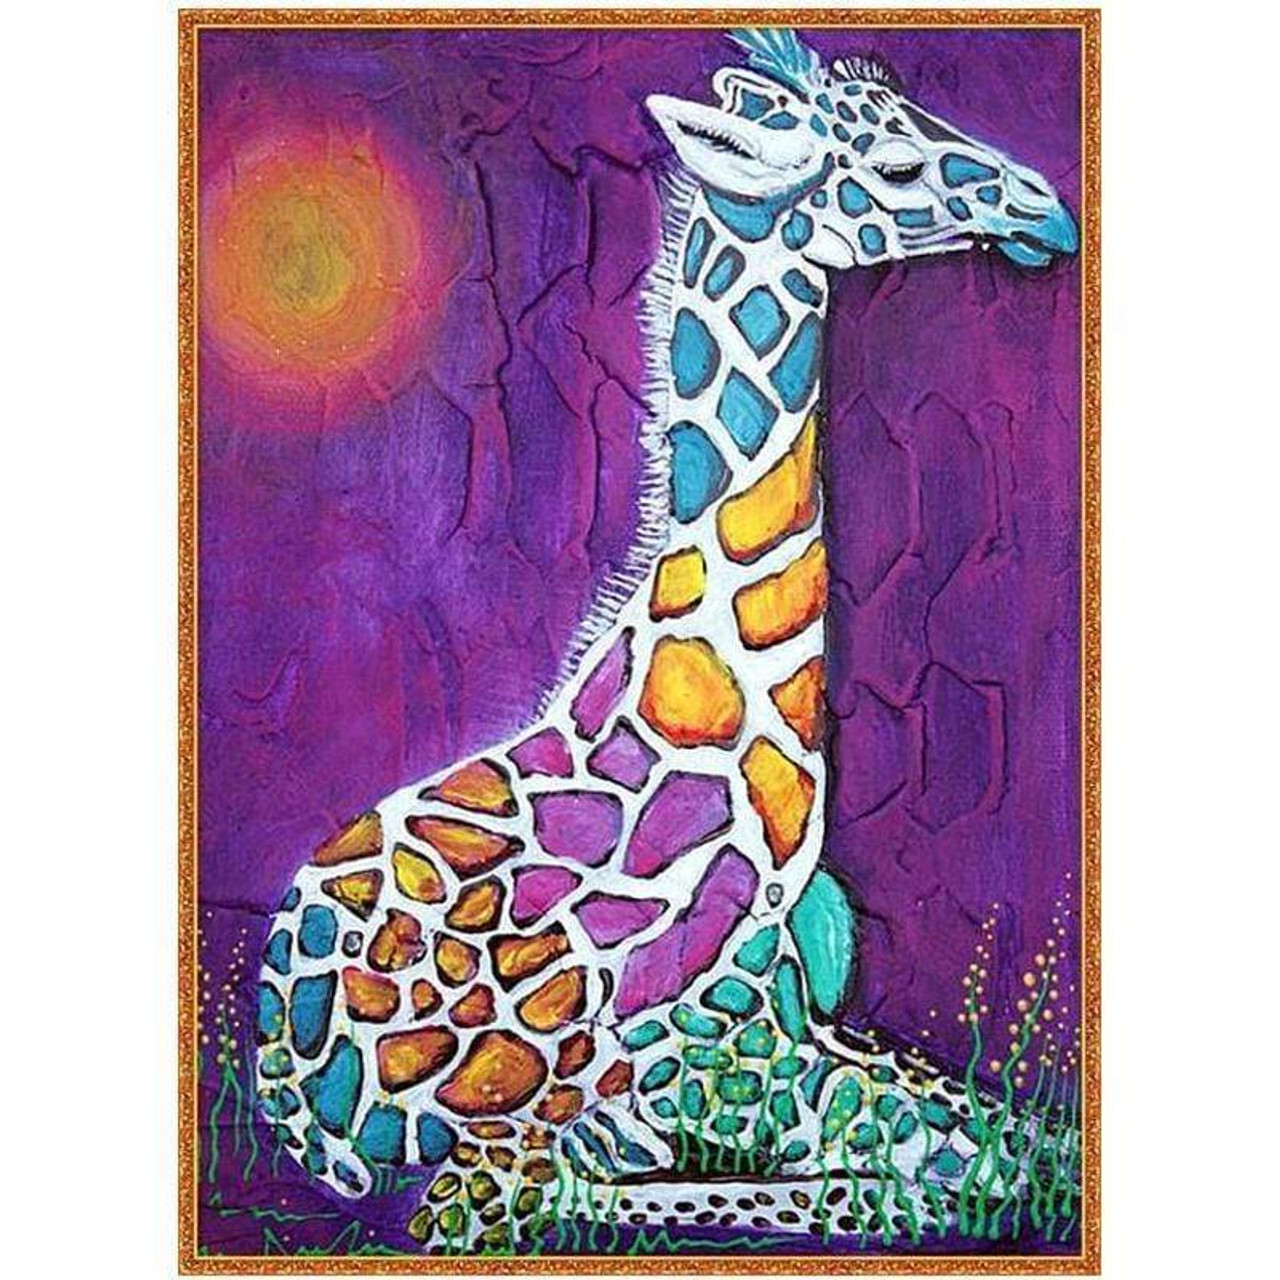 Abstract Giraffe Painting